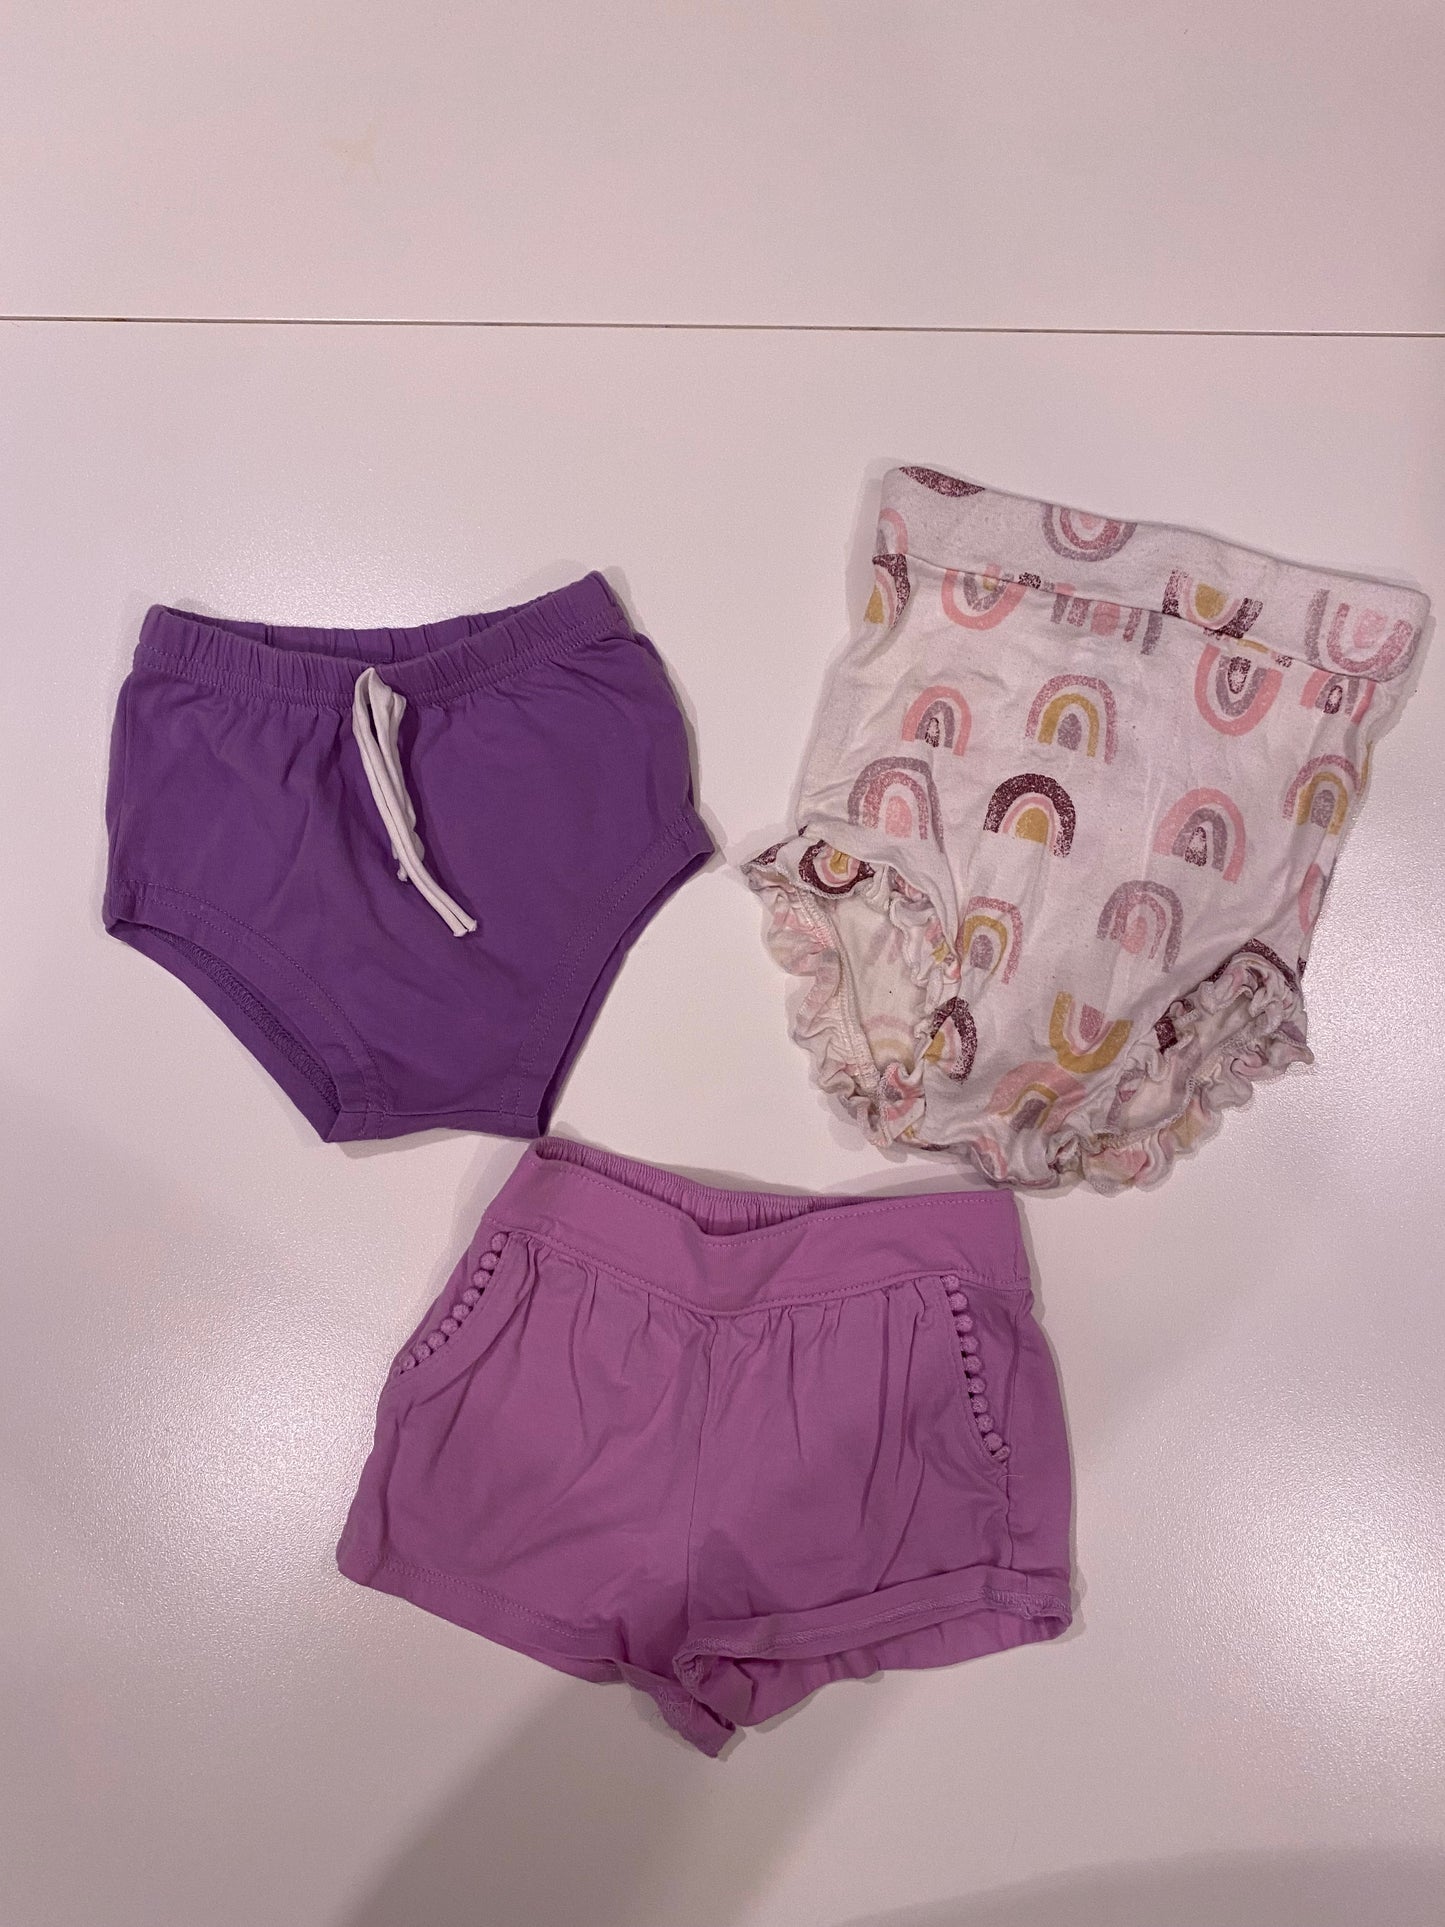 Spearmint Love Rainbow Bloomers and June & January and Oshkosh Purple Short Bundle Set of 3 Girls 12-18M